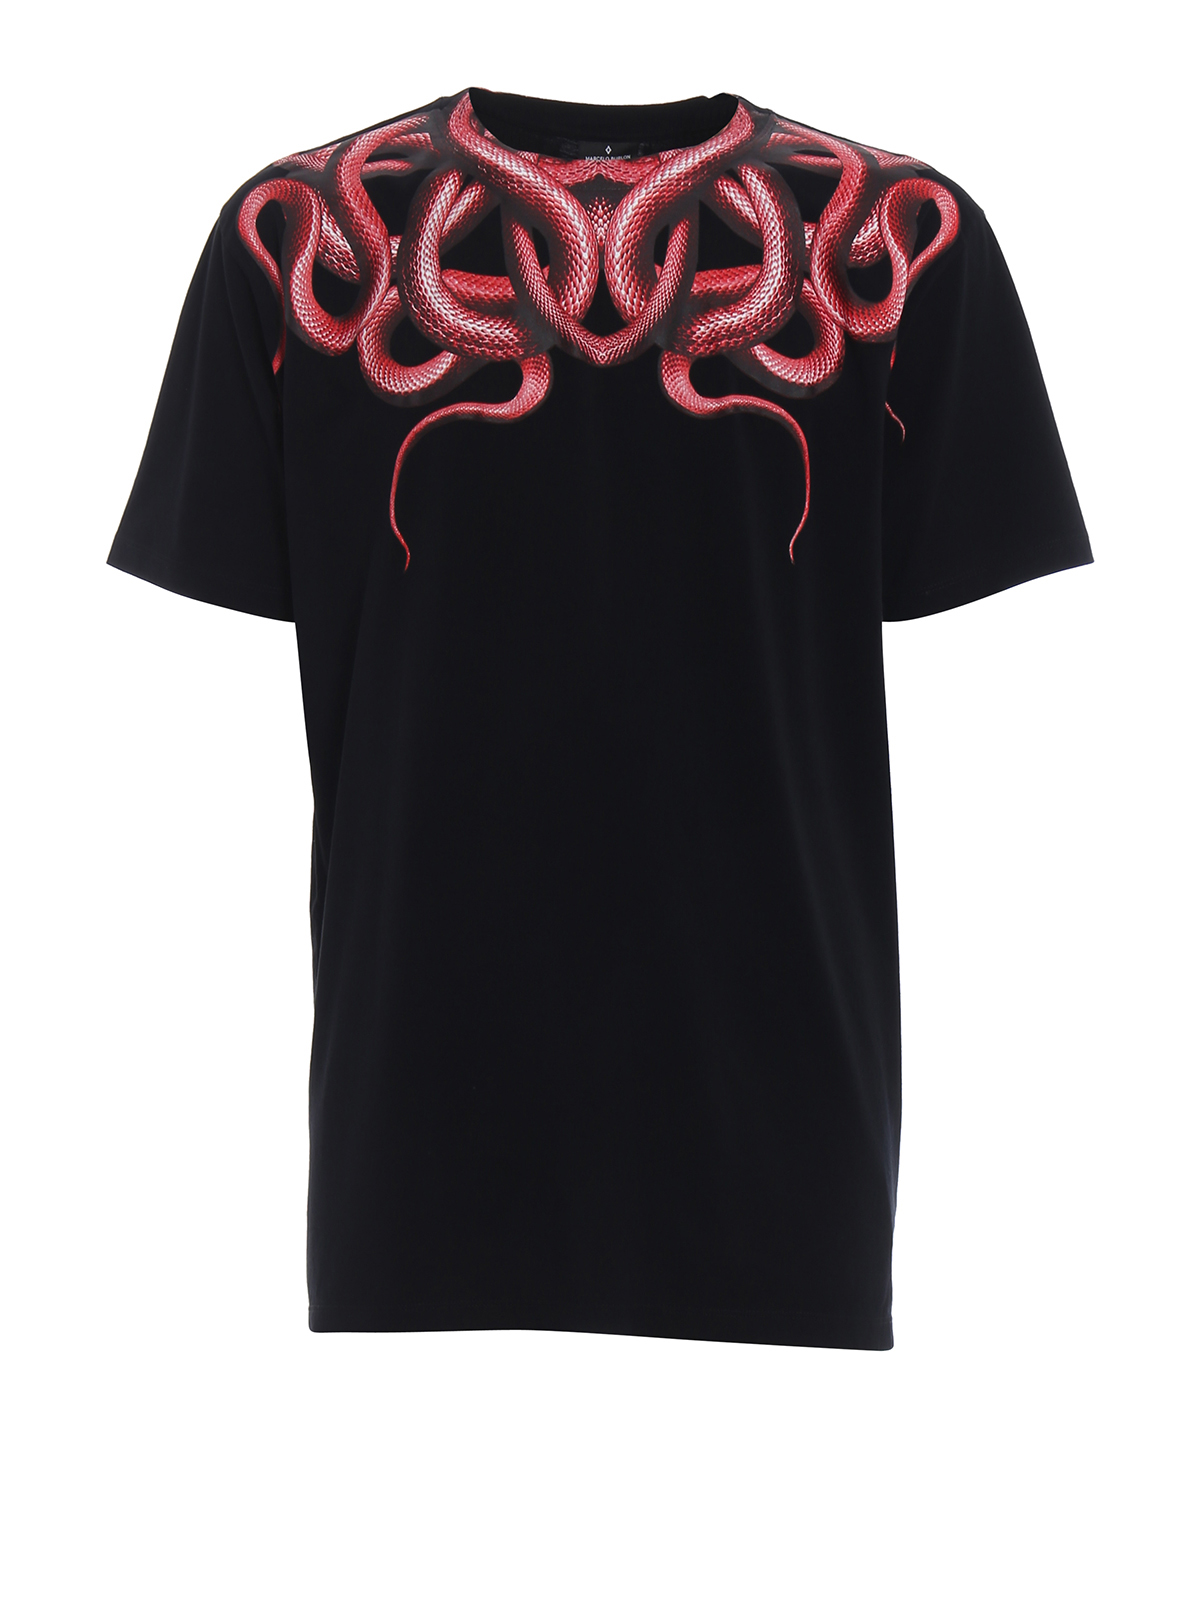 Fellow plade trappe T-shirts Marcelo Burlon - Snake T-shirt - CMAA018S180010091020 | iKRIX.com